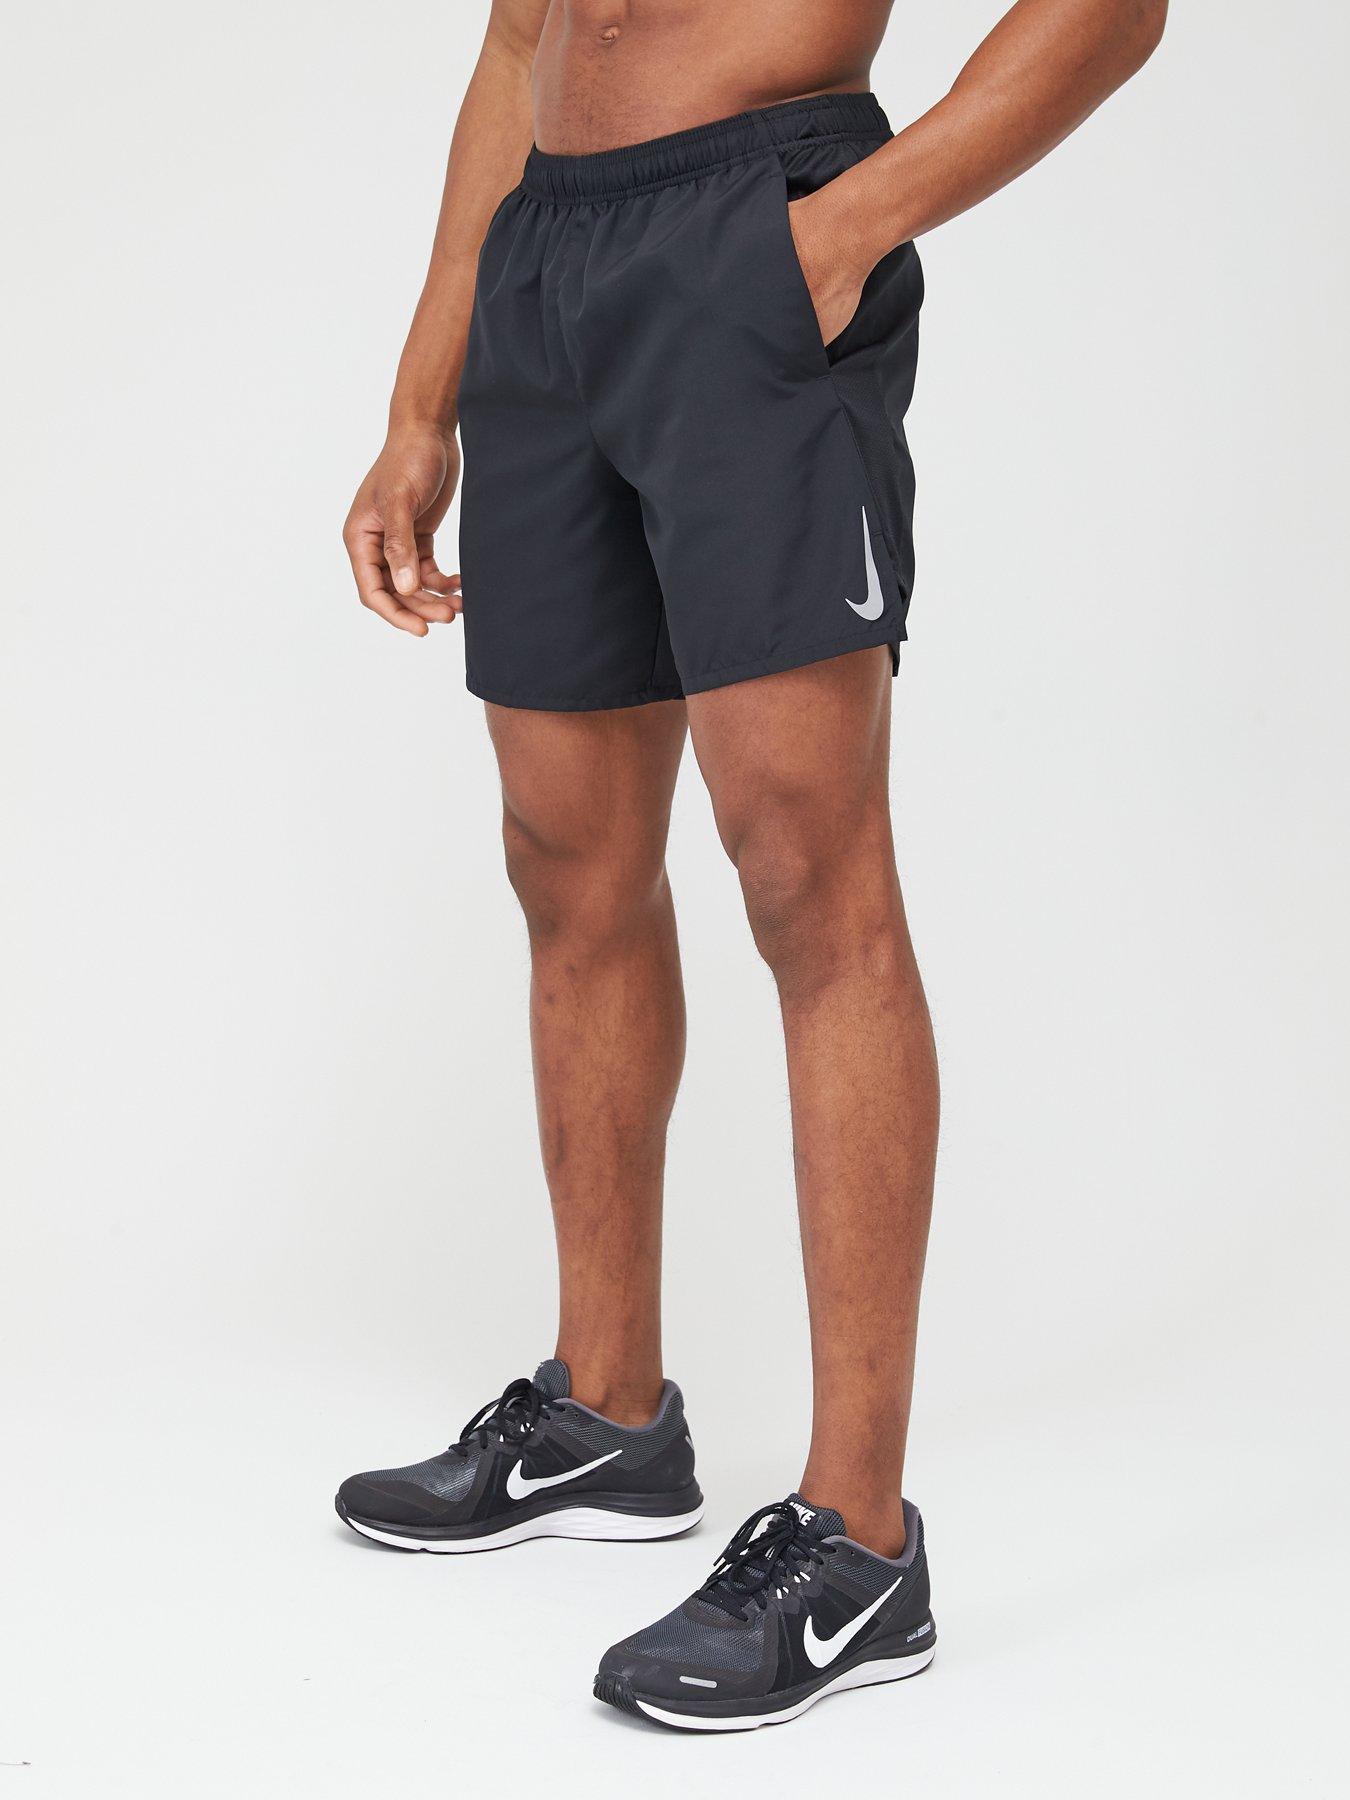 nike running challenger 7 inch shorts